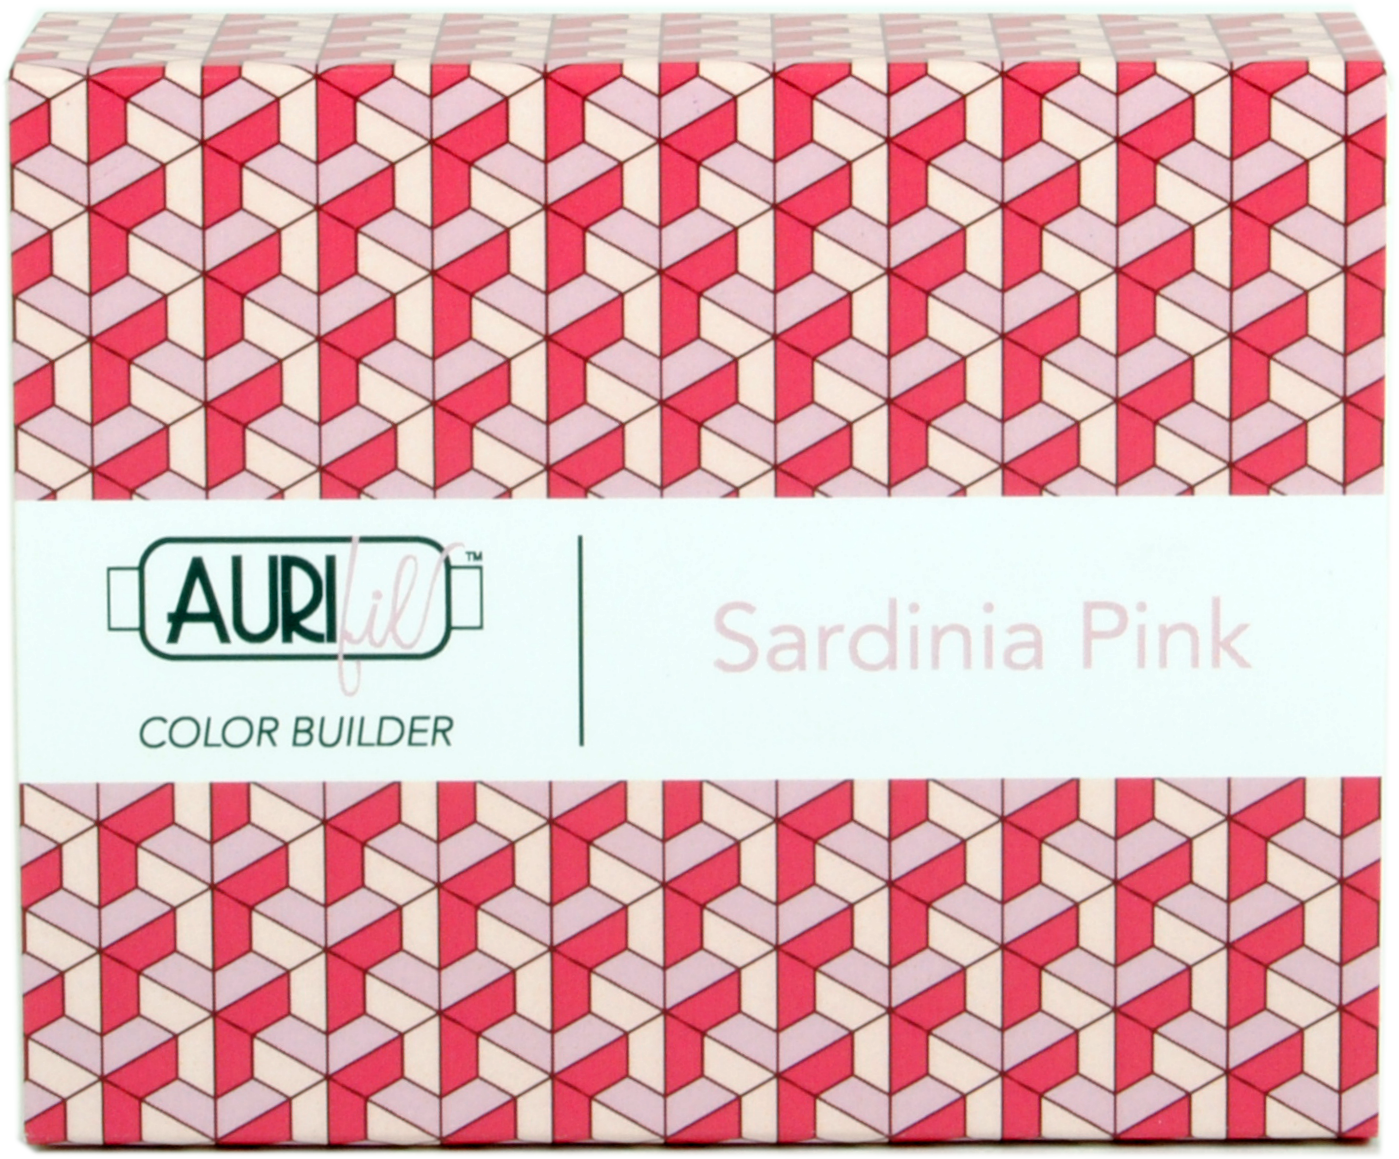 Aurifil Boxed Set -Sardinia Pink Cotton Thread 3 x Large Spools